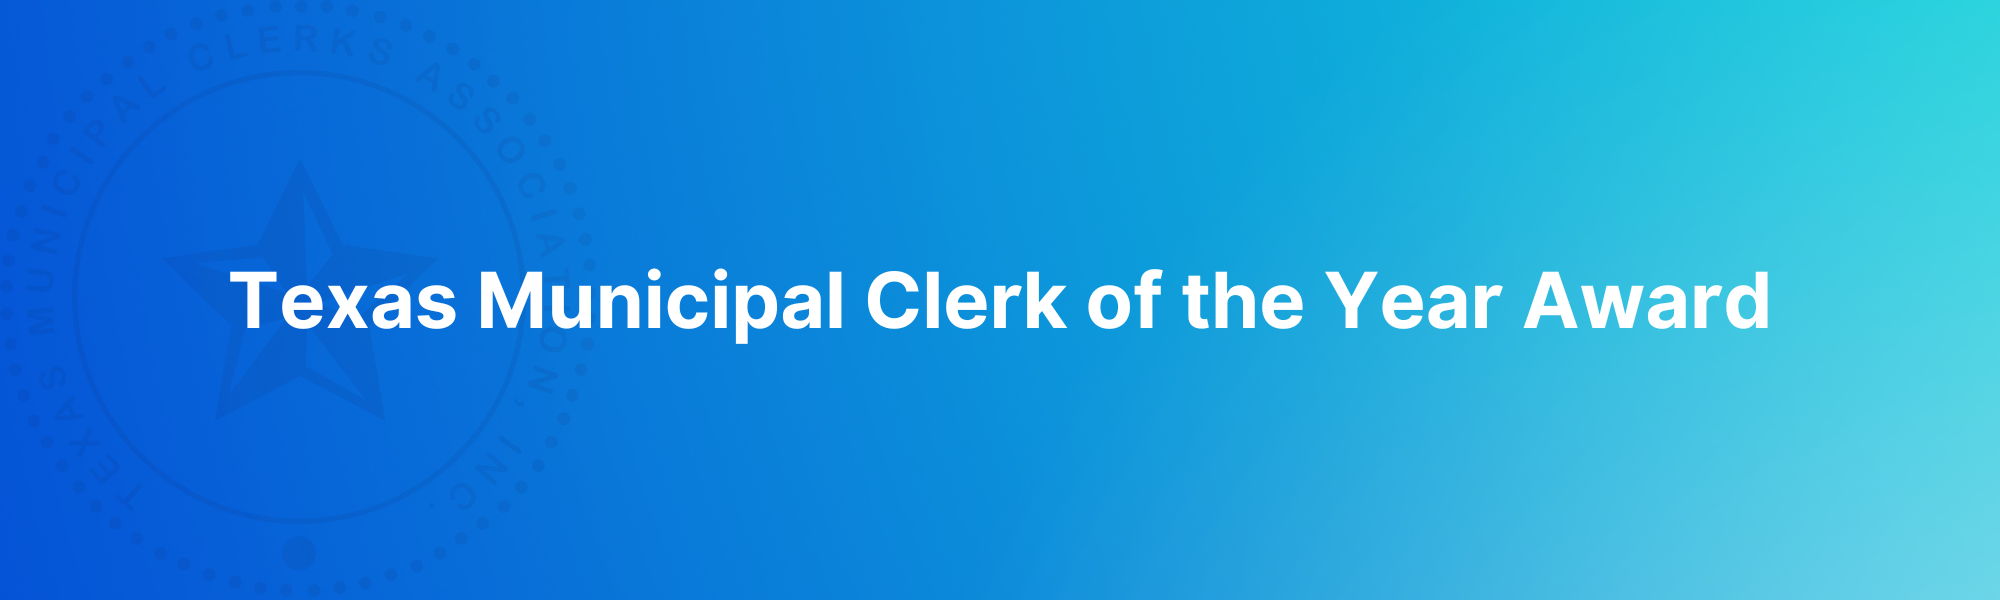 Texas Municipal Clerk of the Year Award